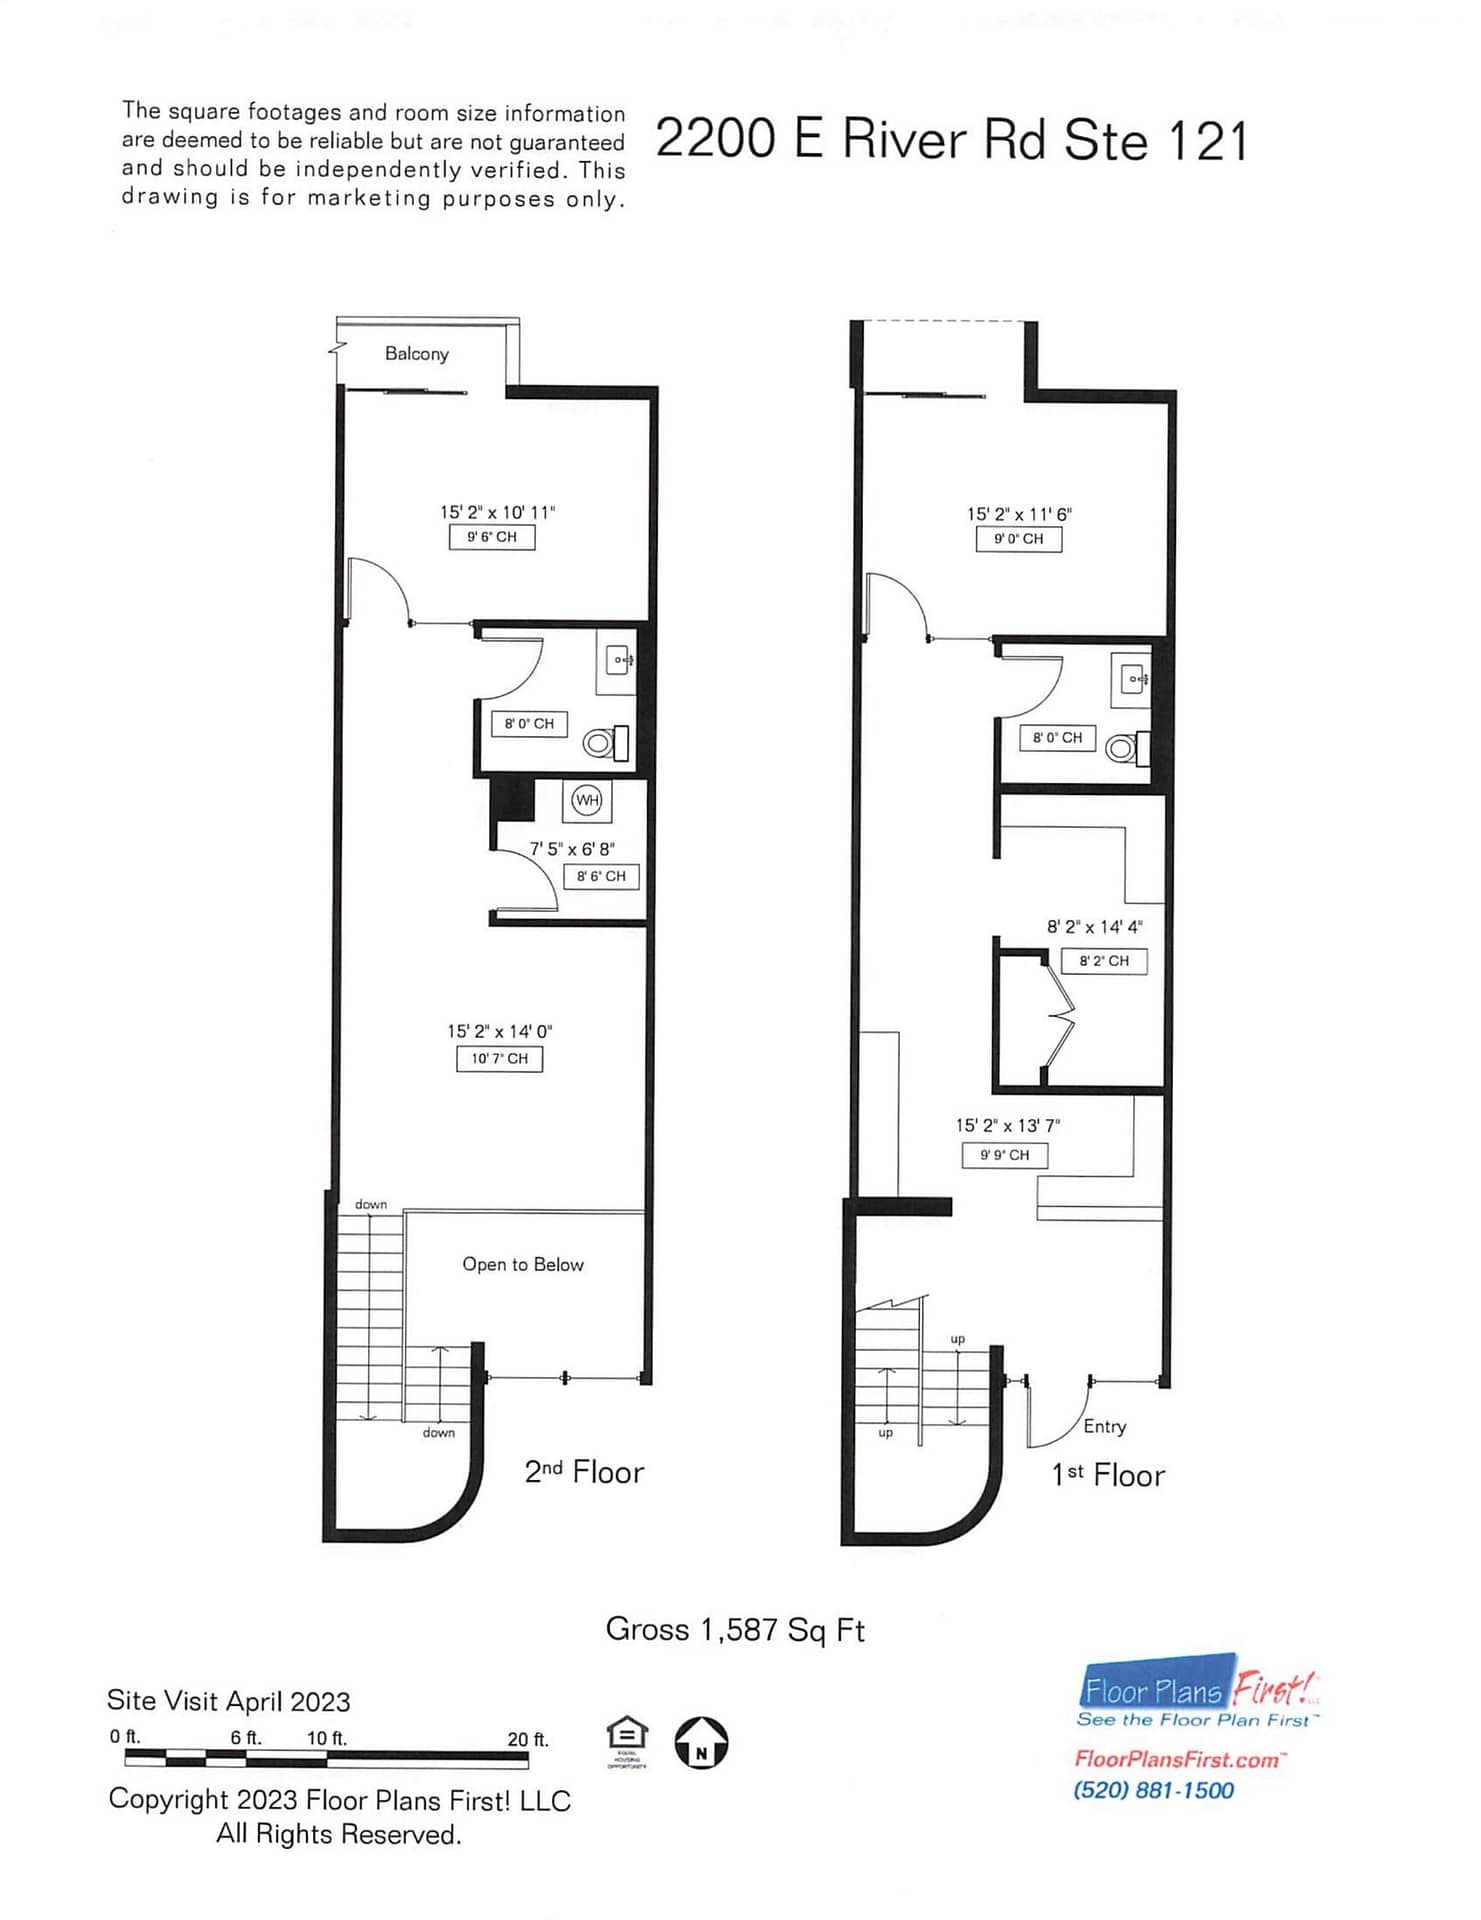 2200 E River Rd, floorplan for unit 121